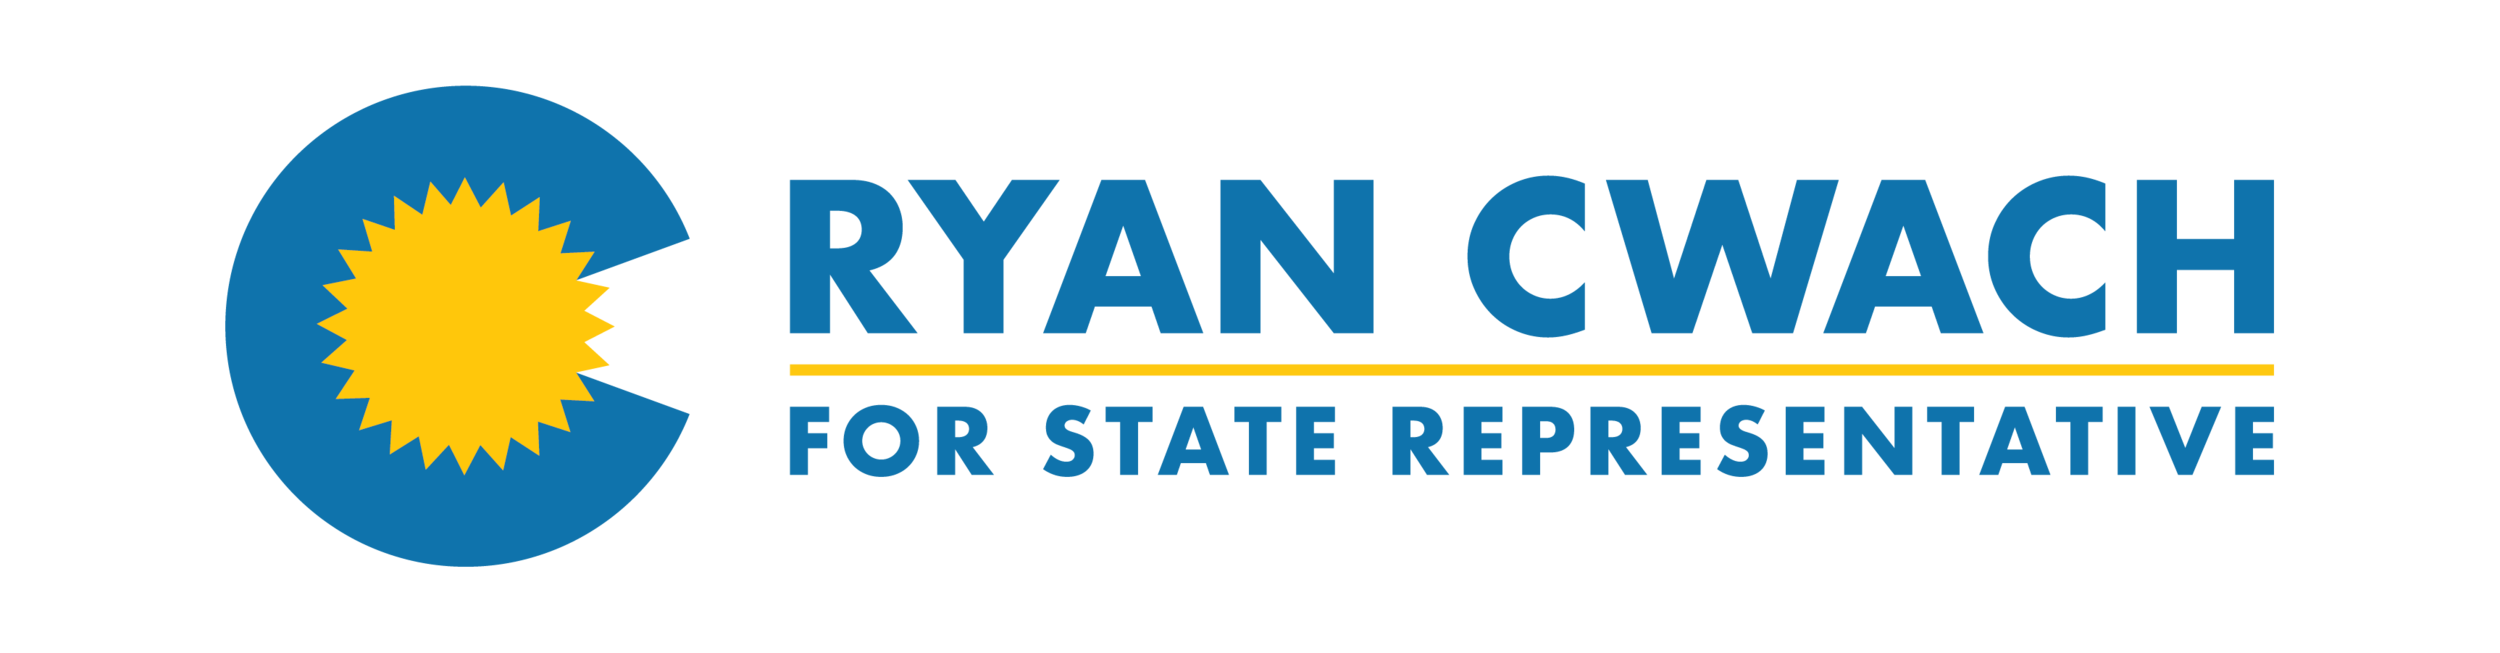 Ryan Cwach for SD State Representative